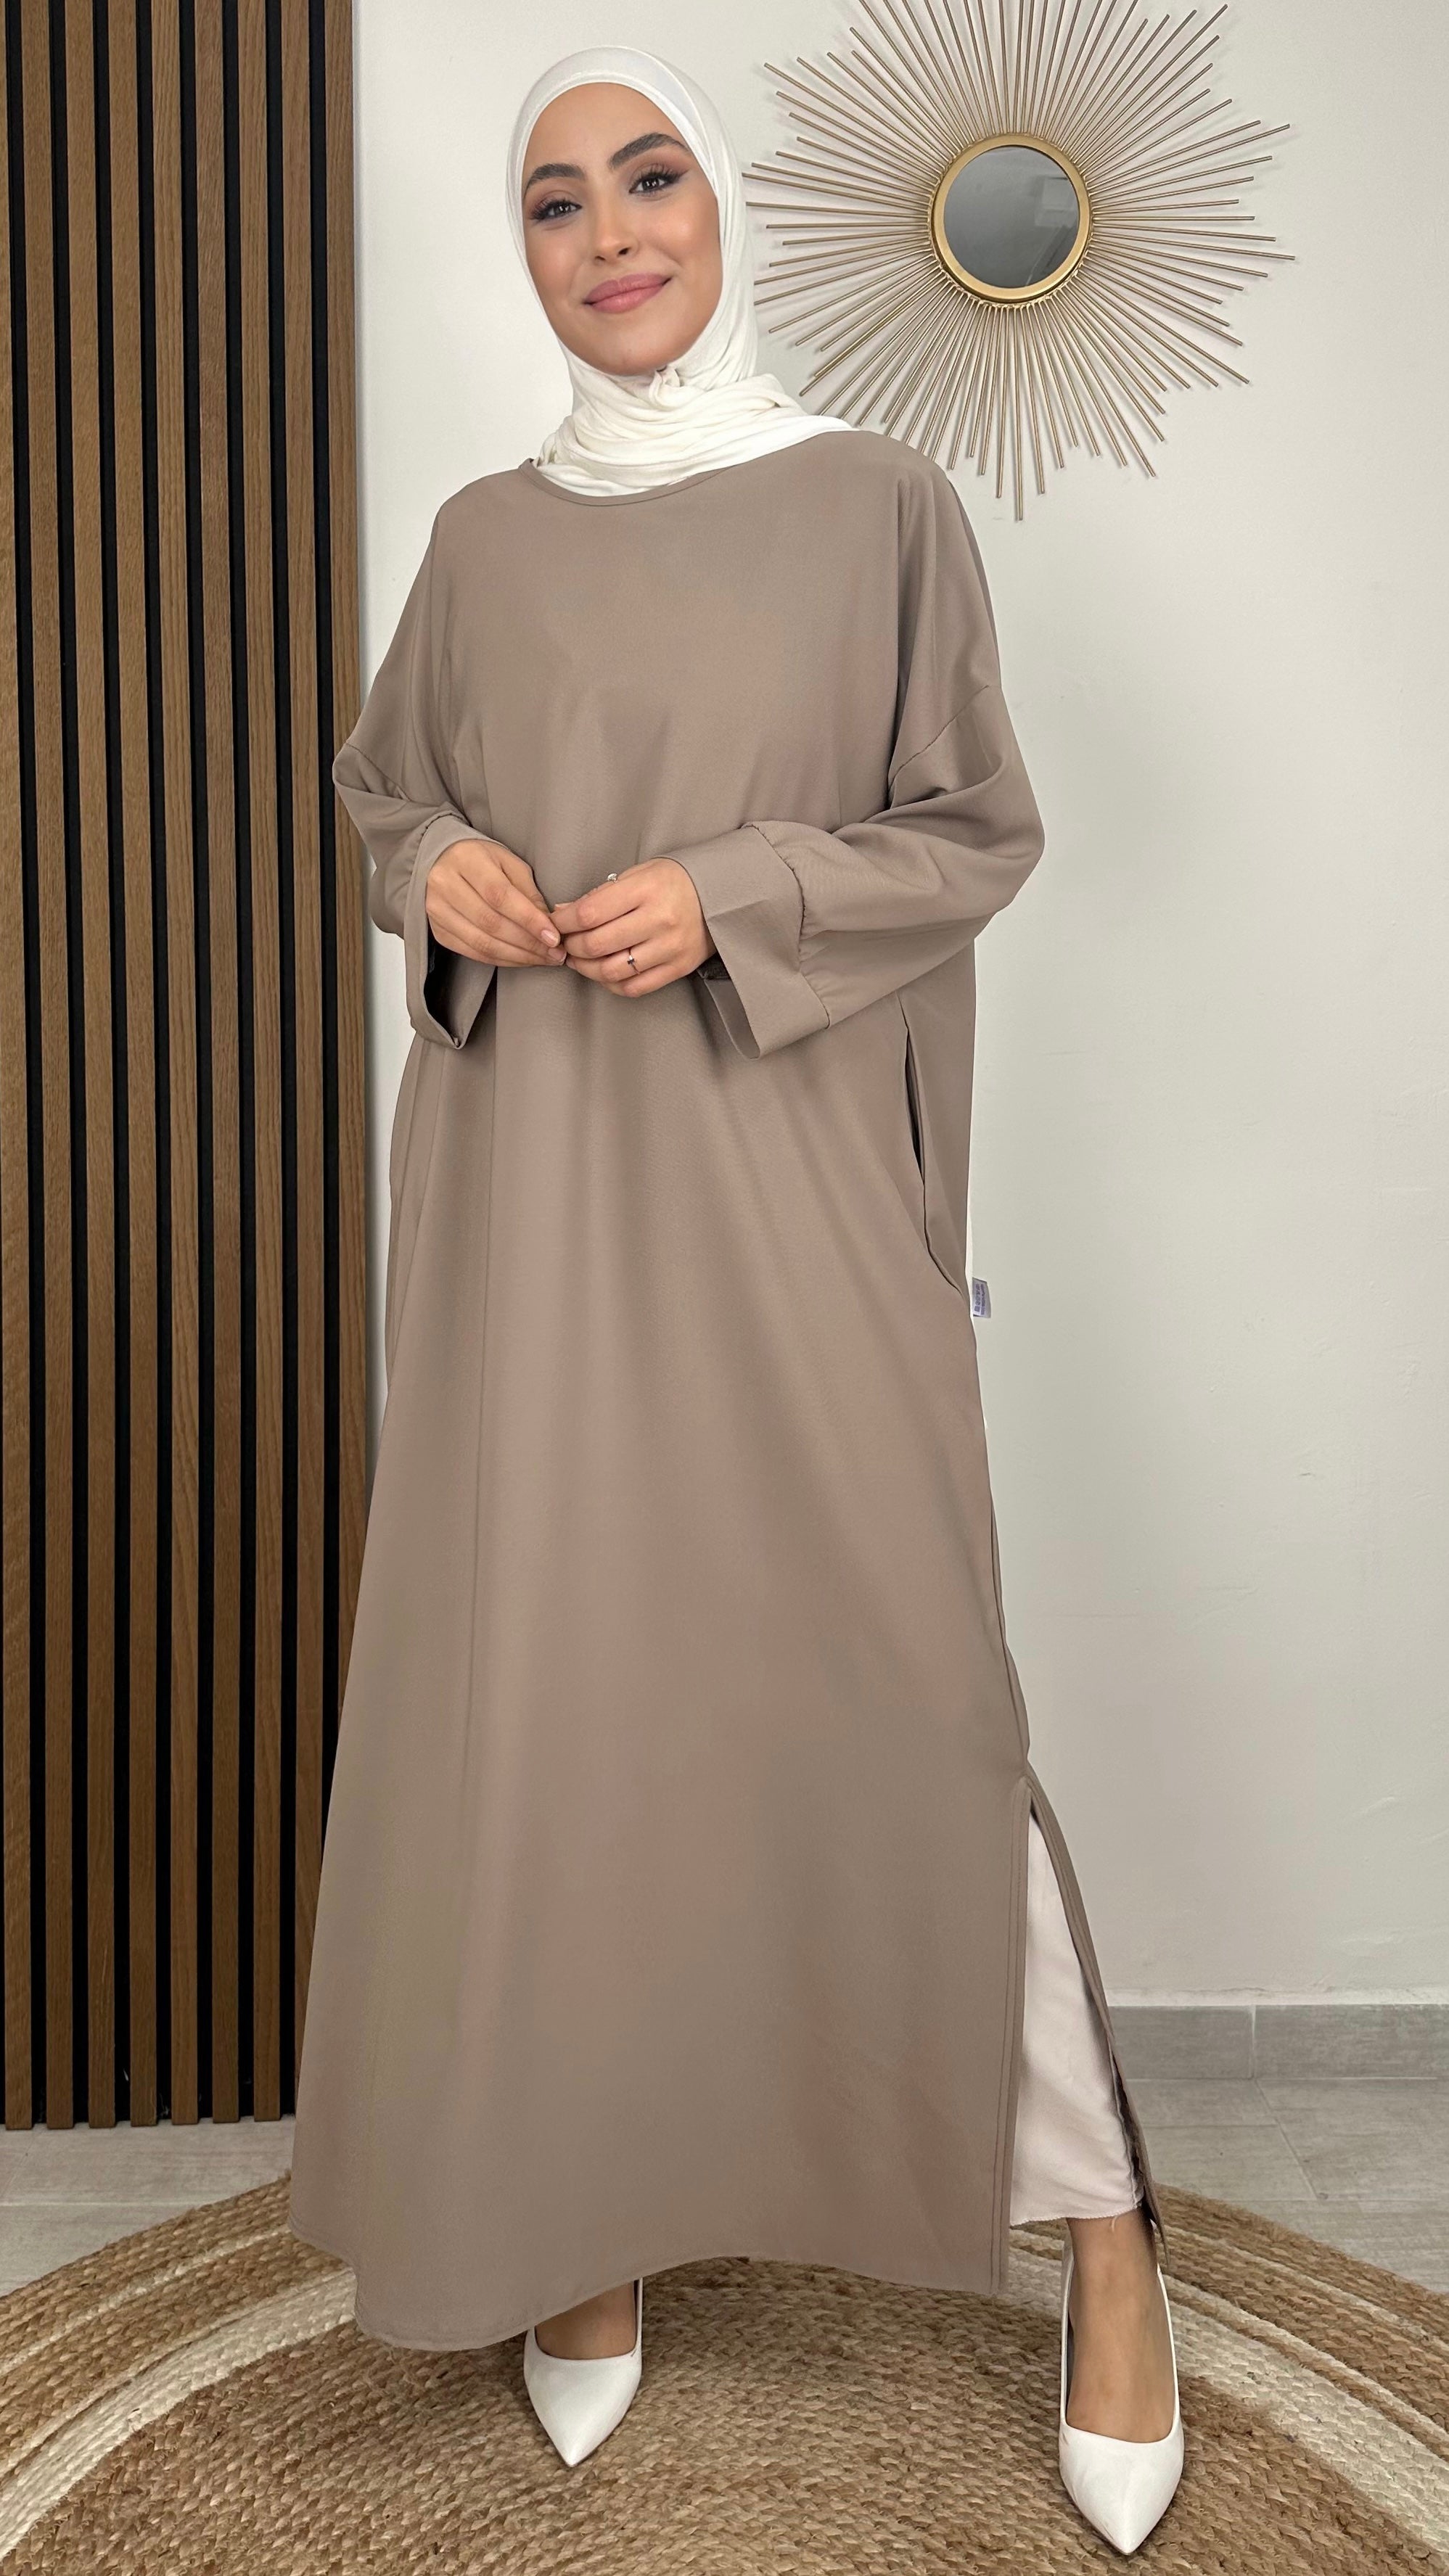 Abaya split  - abaya semplice - abaya con tasche - hijab  - abaya per pellegrinaggio - umra e hajj - leggero spacco laterale - vinaccia